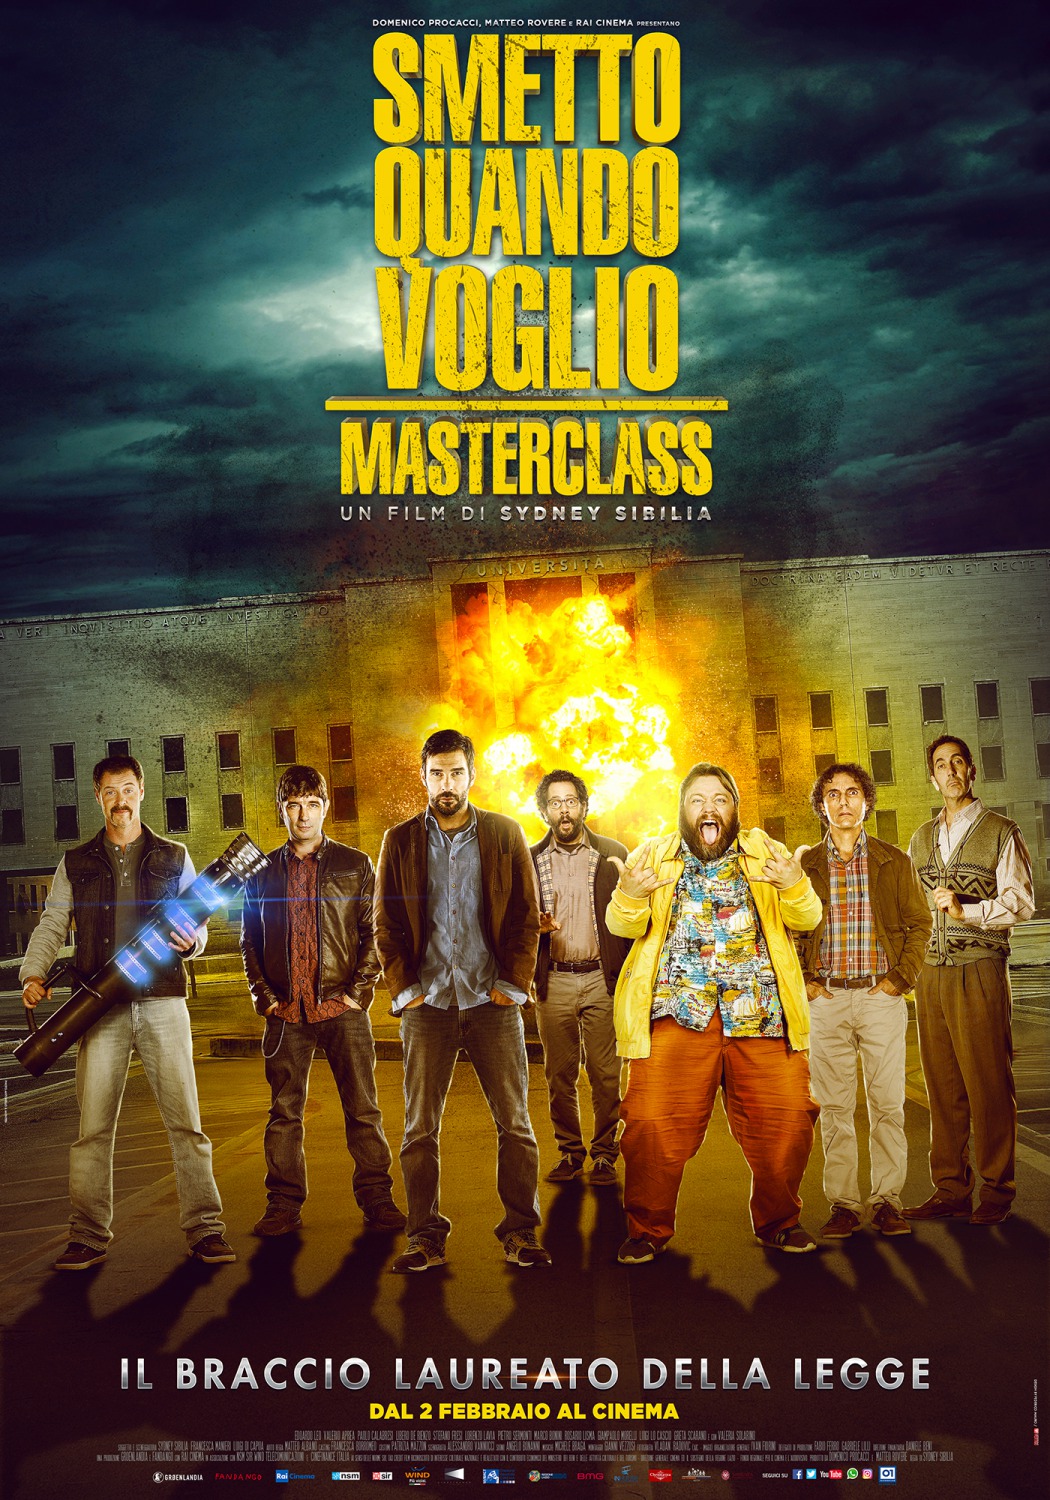 Extra Large Movie Poster Image for Smetto quando voglio: Masterclass (#5 of 16)